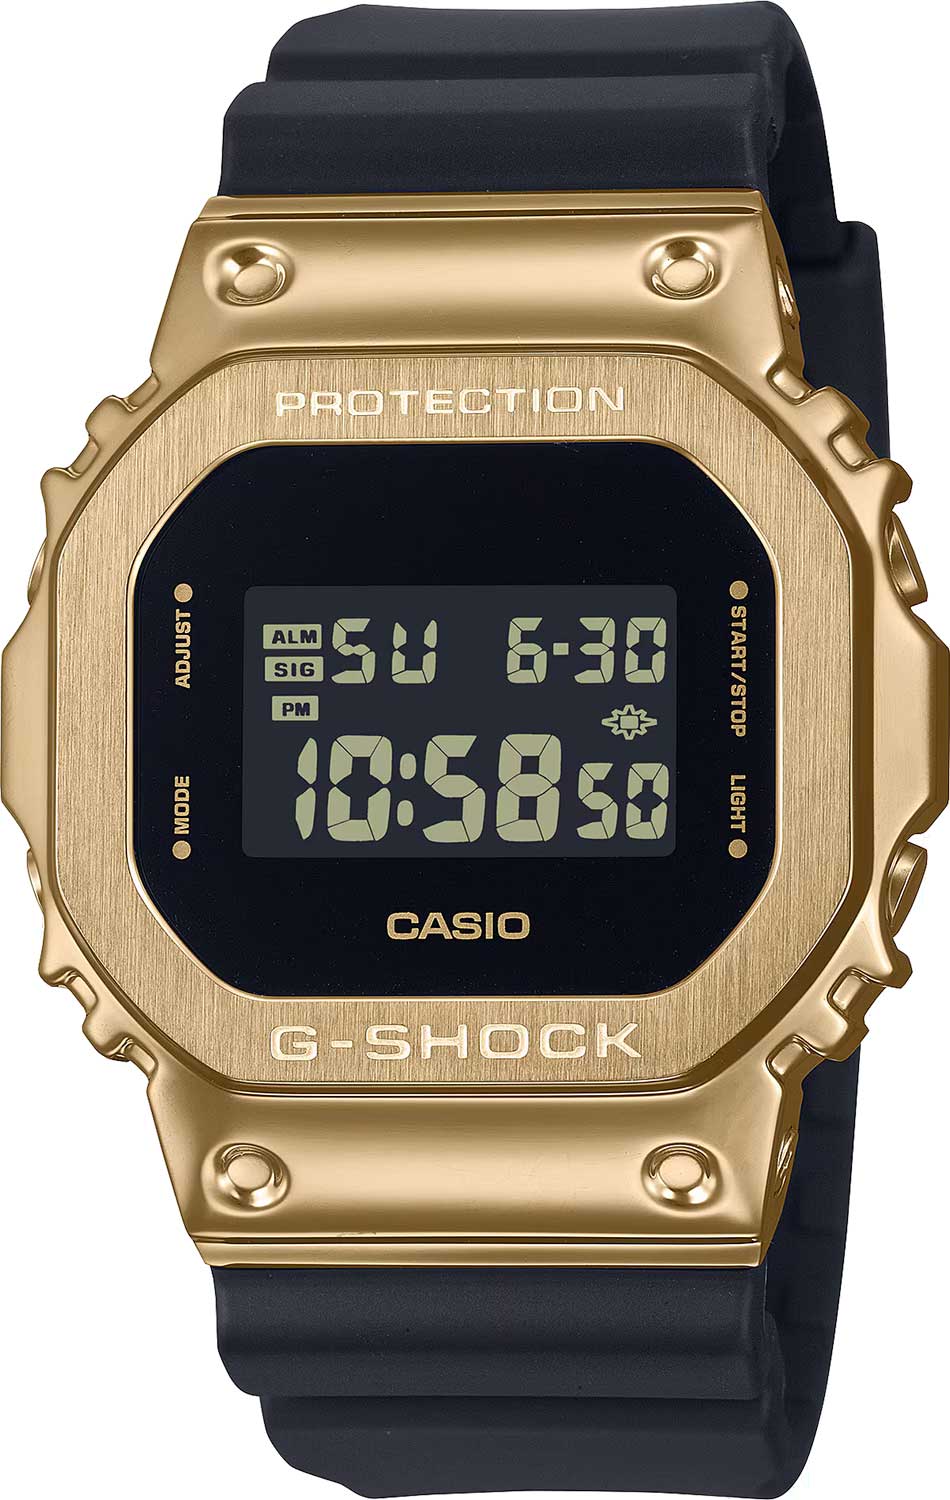    Casio G-SHOCK GM-5600UG-9  